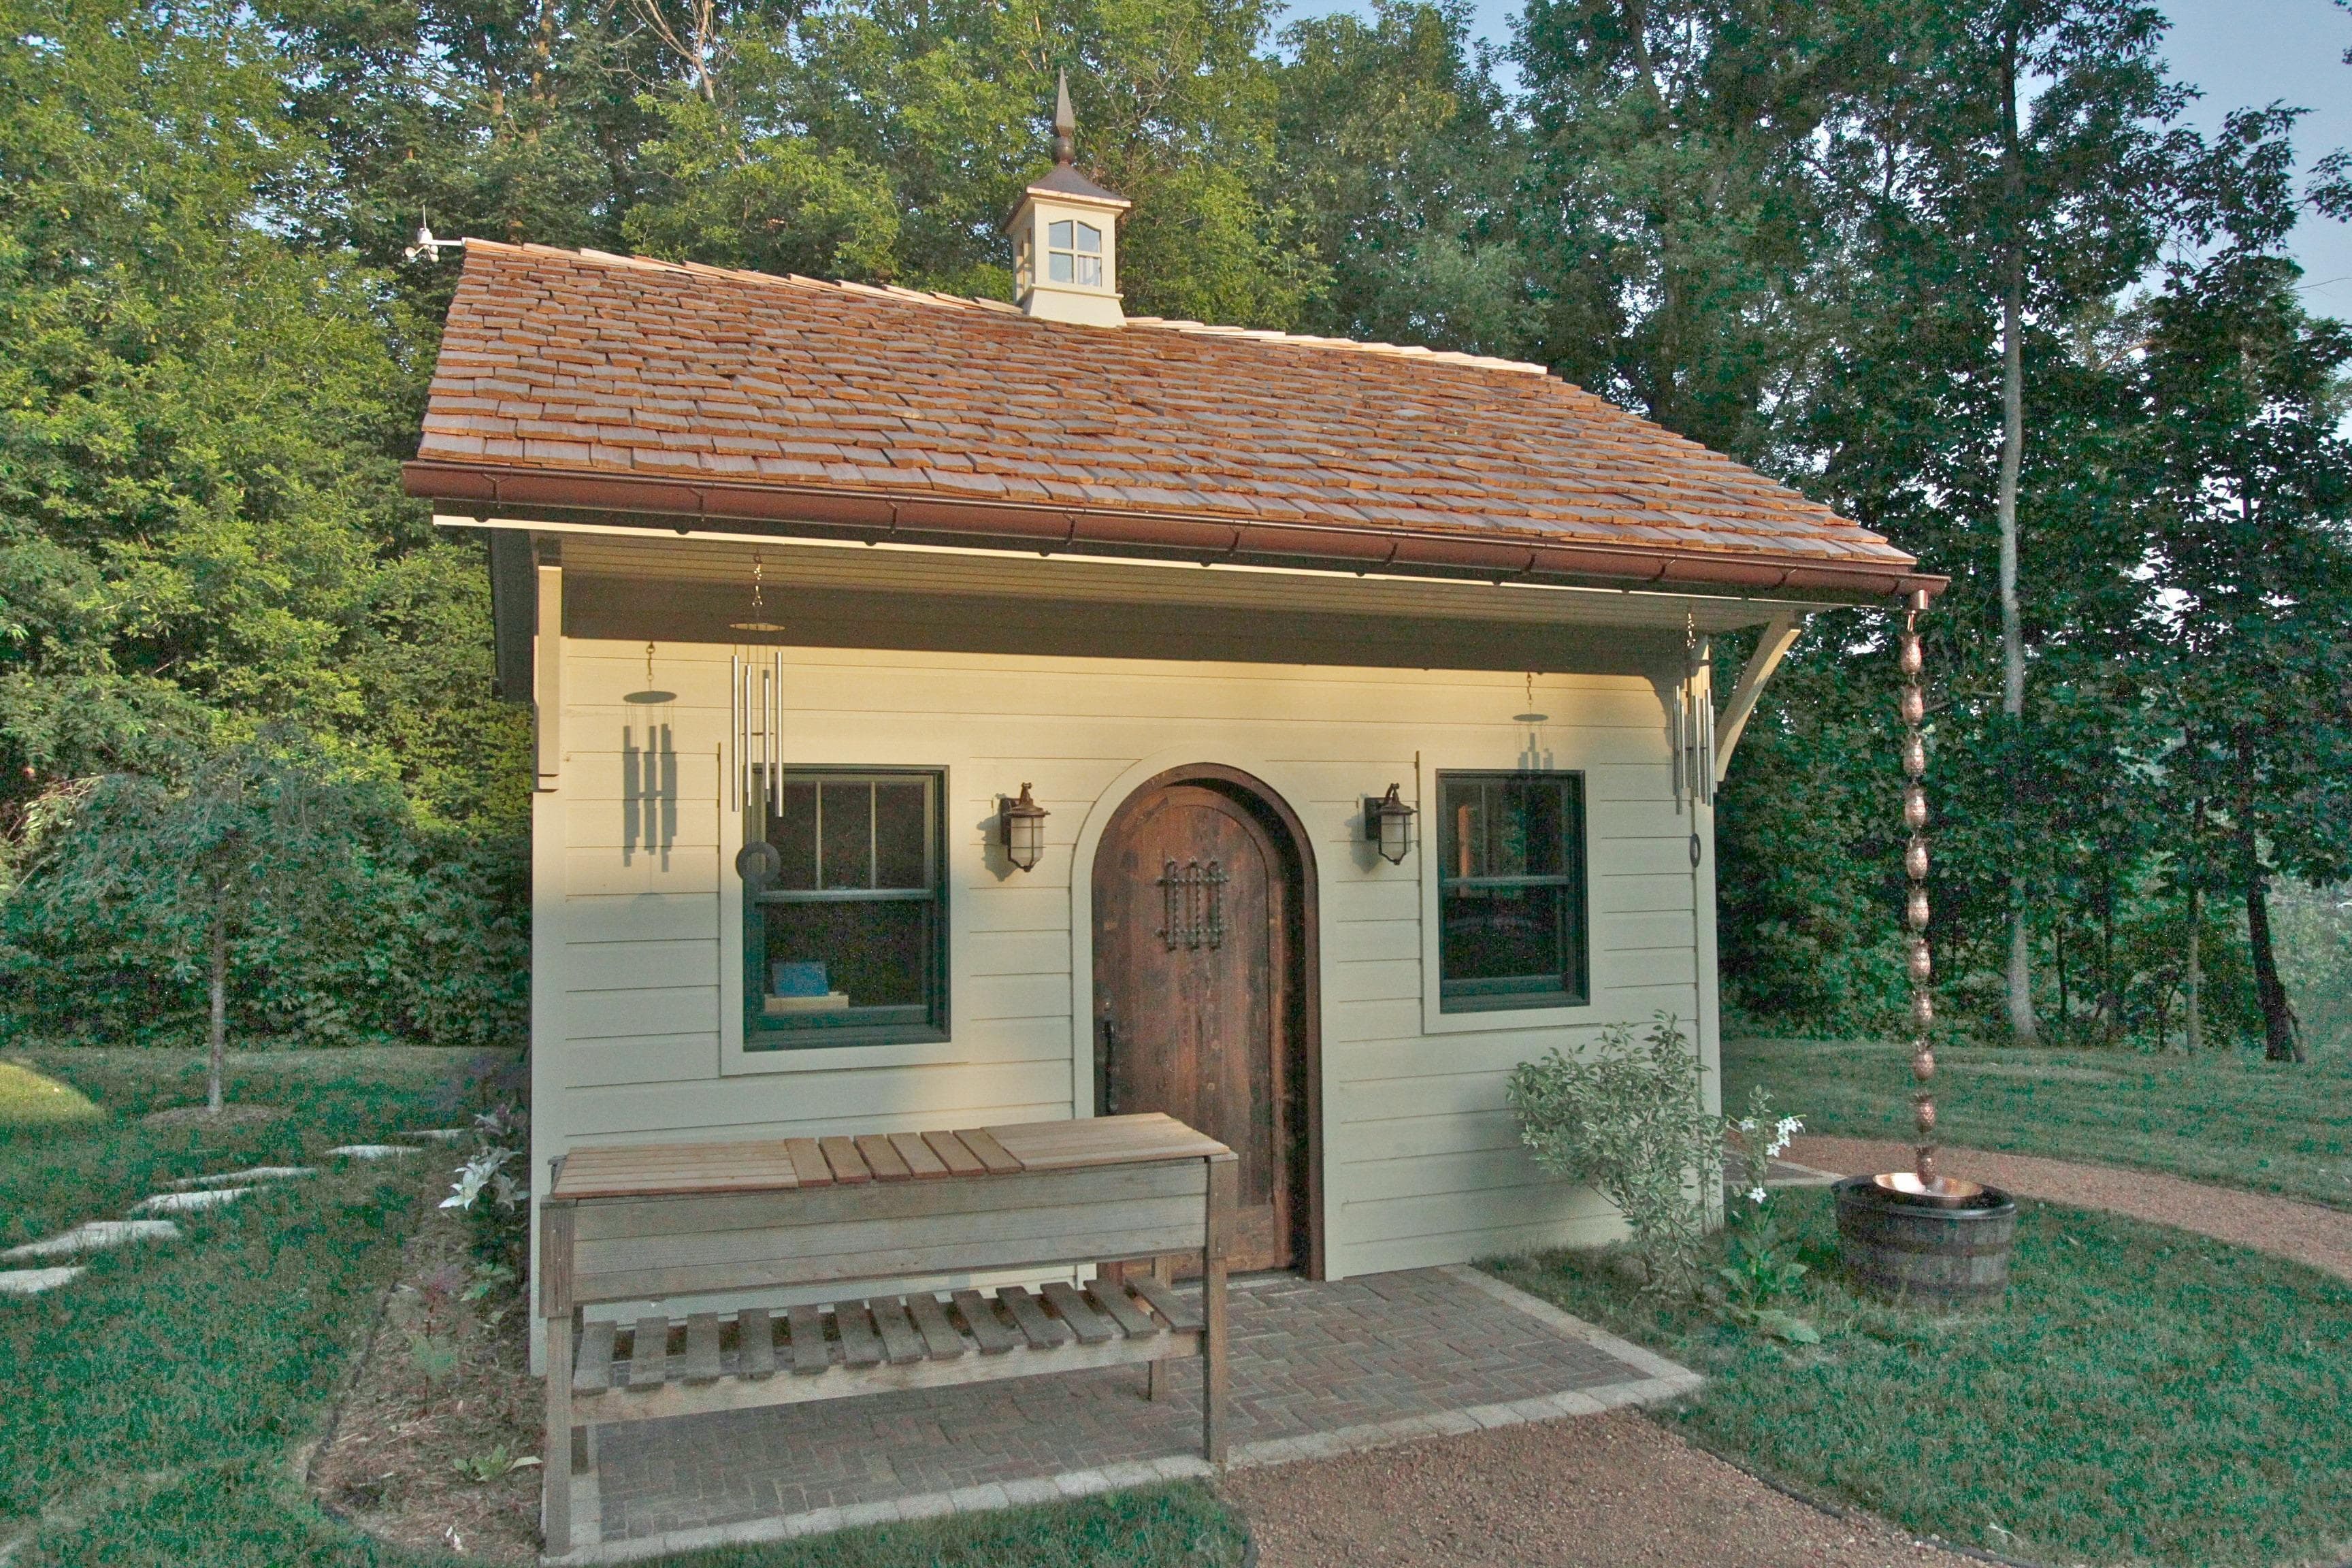 Cedar Glen Echo shed 14 x 16 with windowed cupola in Janesville, Wisconsin. ID number 131092-2